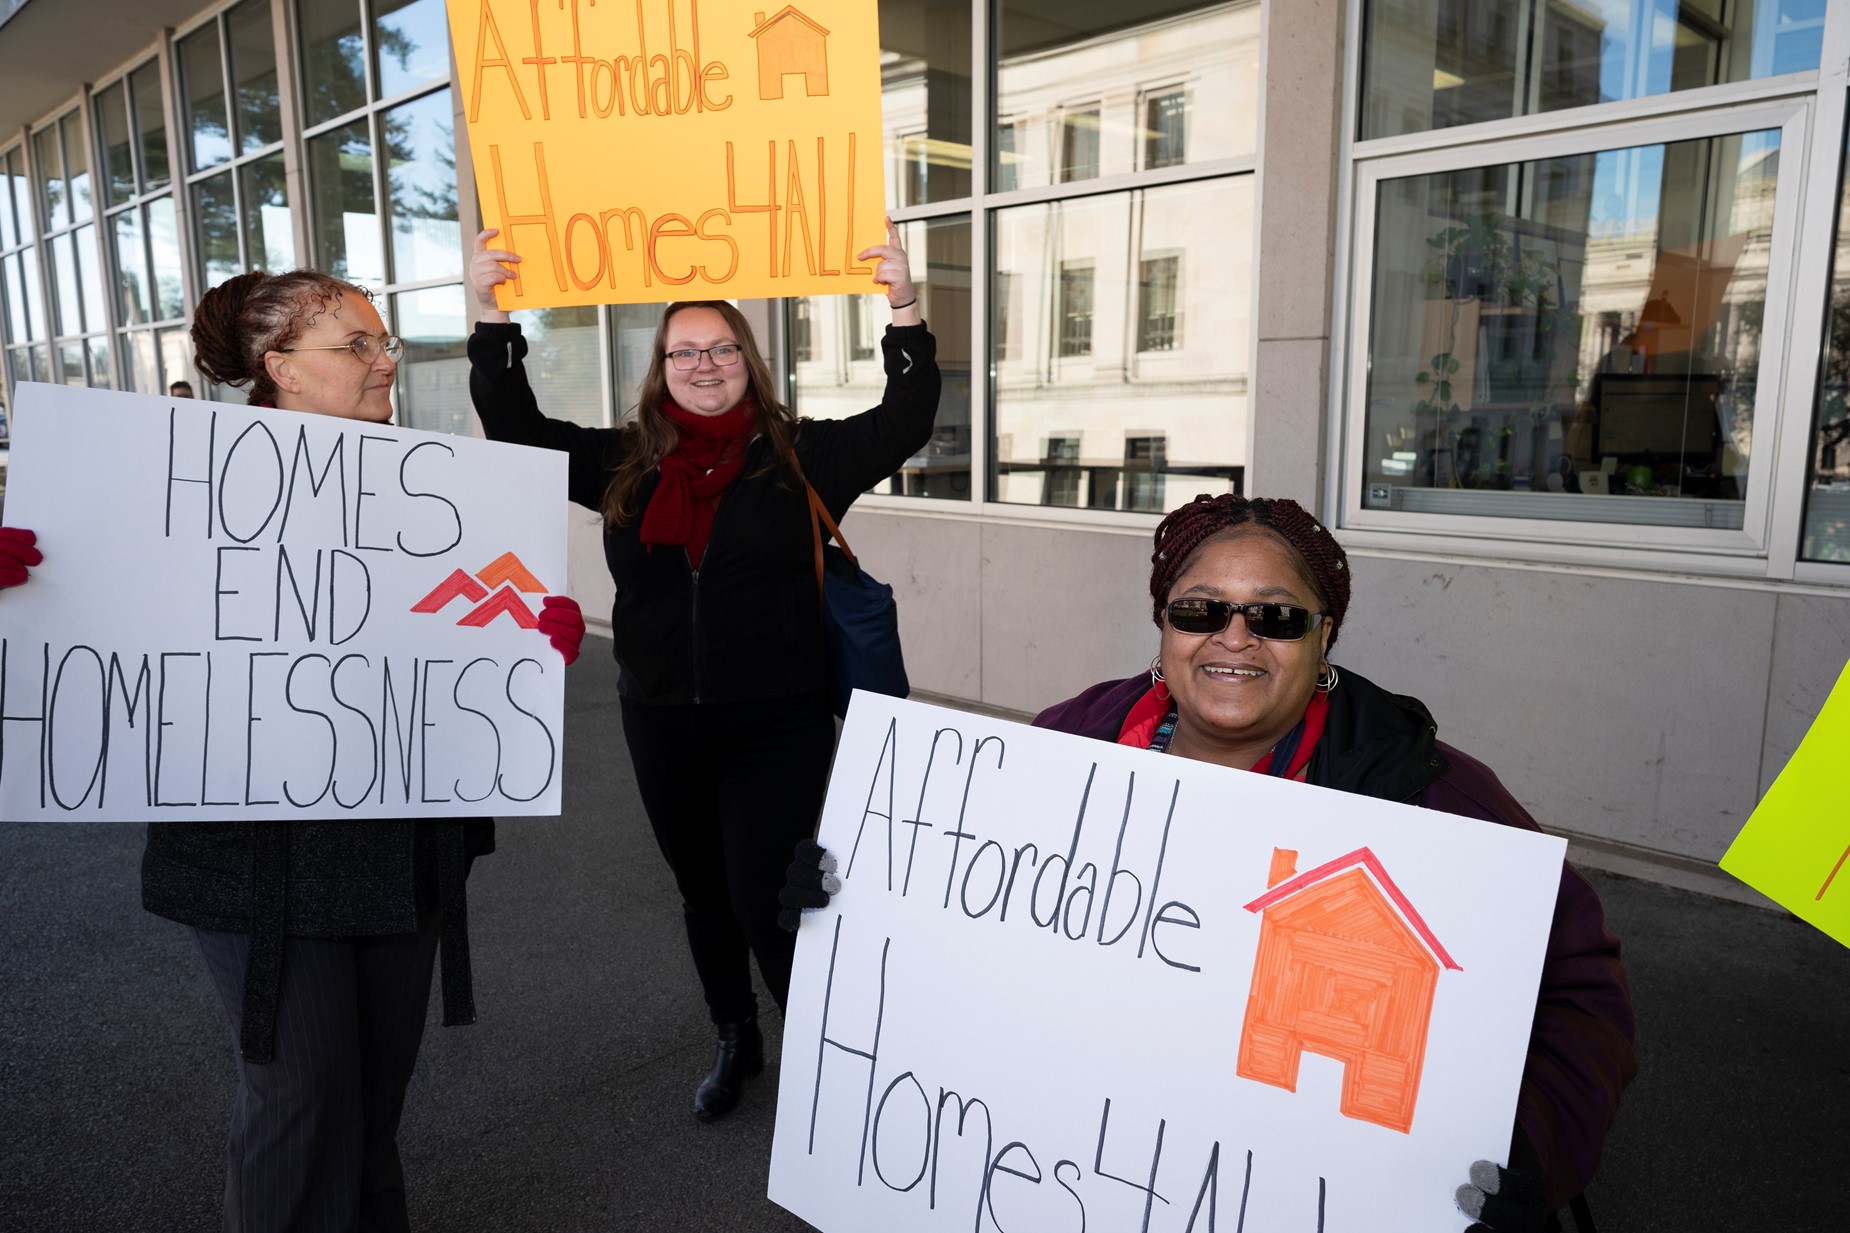 Washington Low Income Housing Alliance